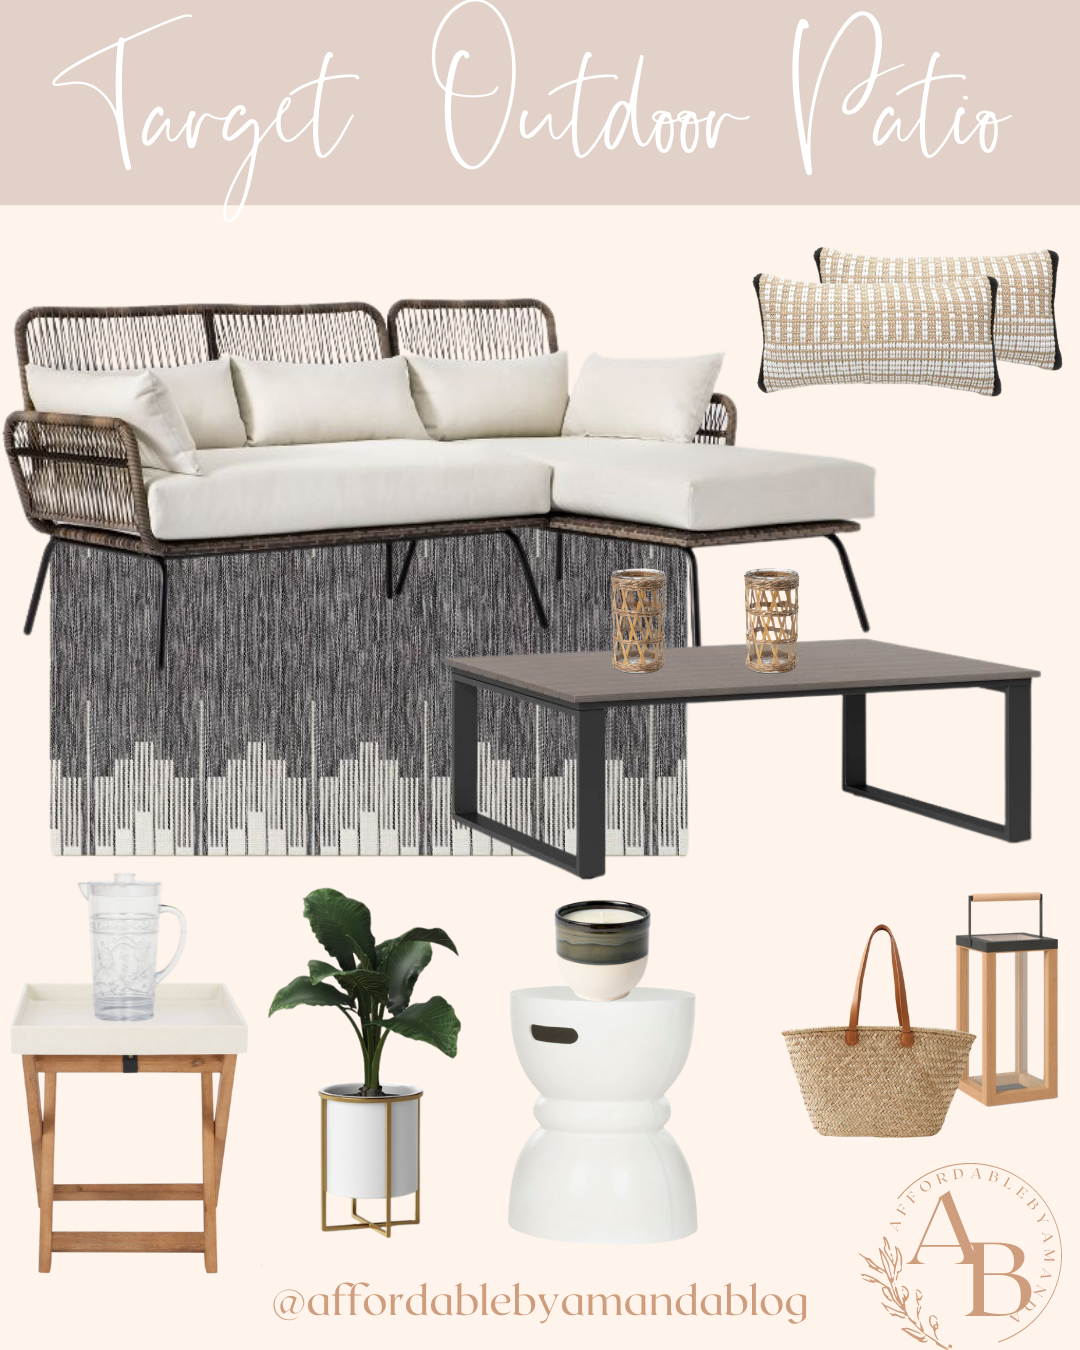 Latigo Patio Sectional Brown/Linen - Opalhouse™ - Outdoor Living Space Ideas - Affordable by Amanda